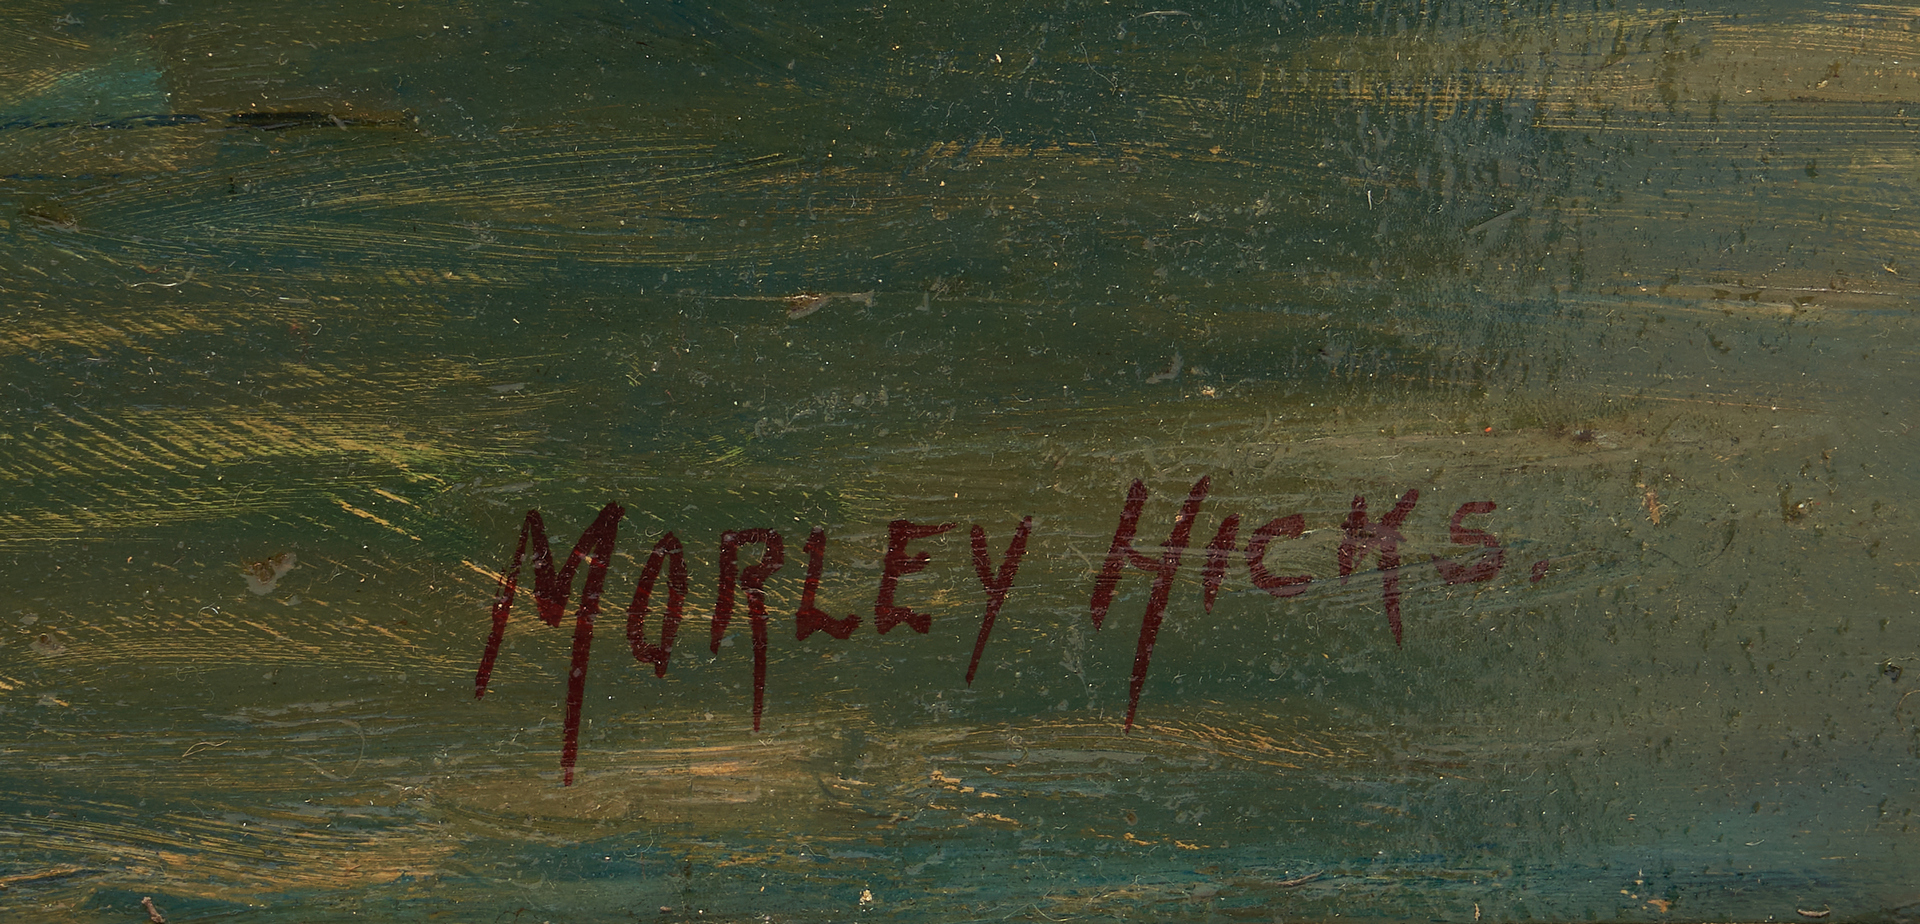 Lot 94: Morley Hicks O/B, Harbor Scene Painting